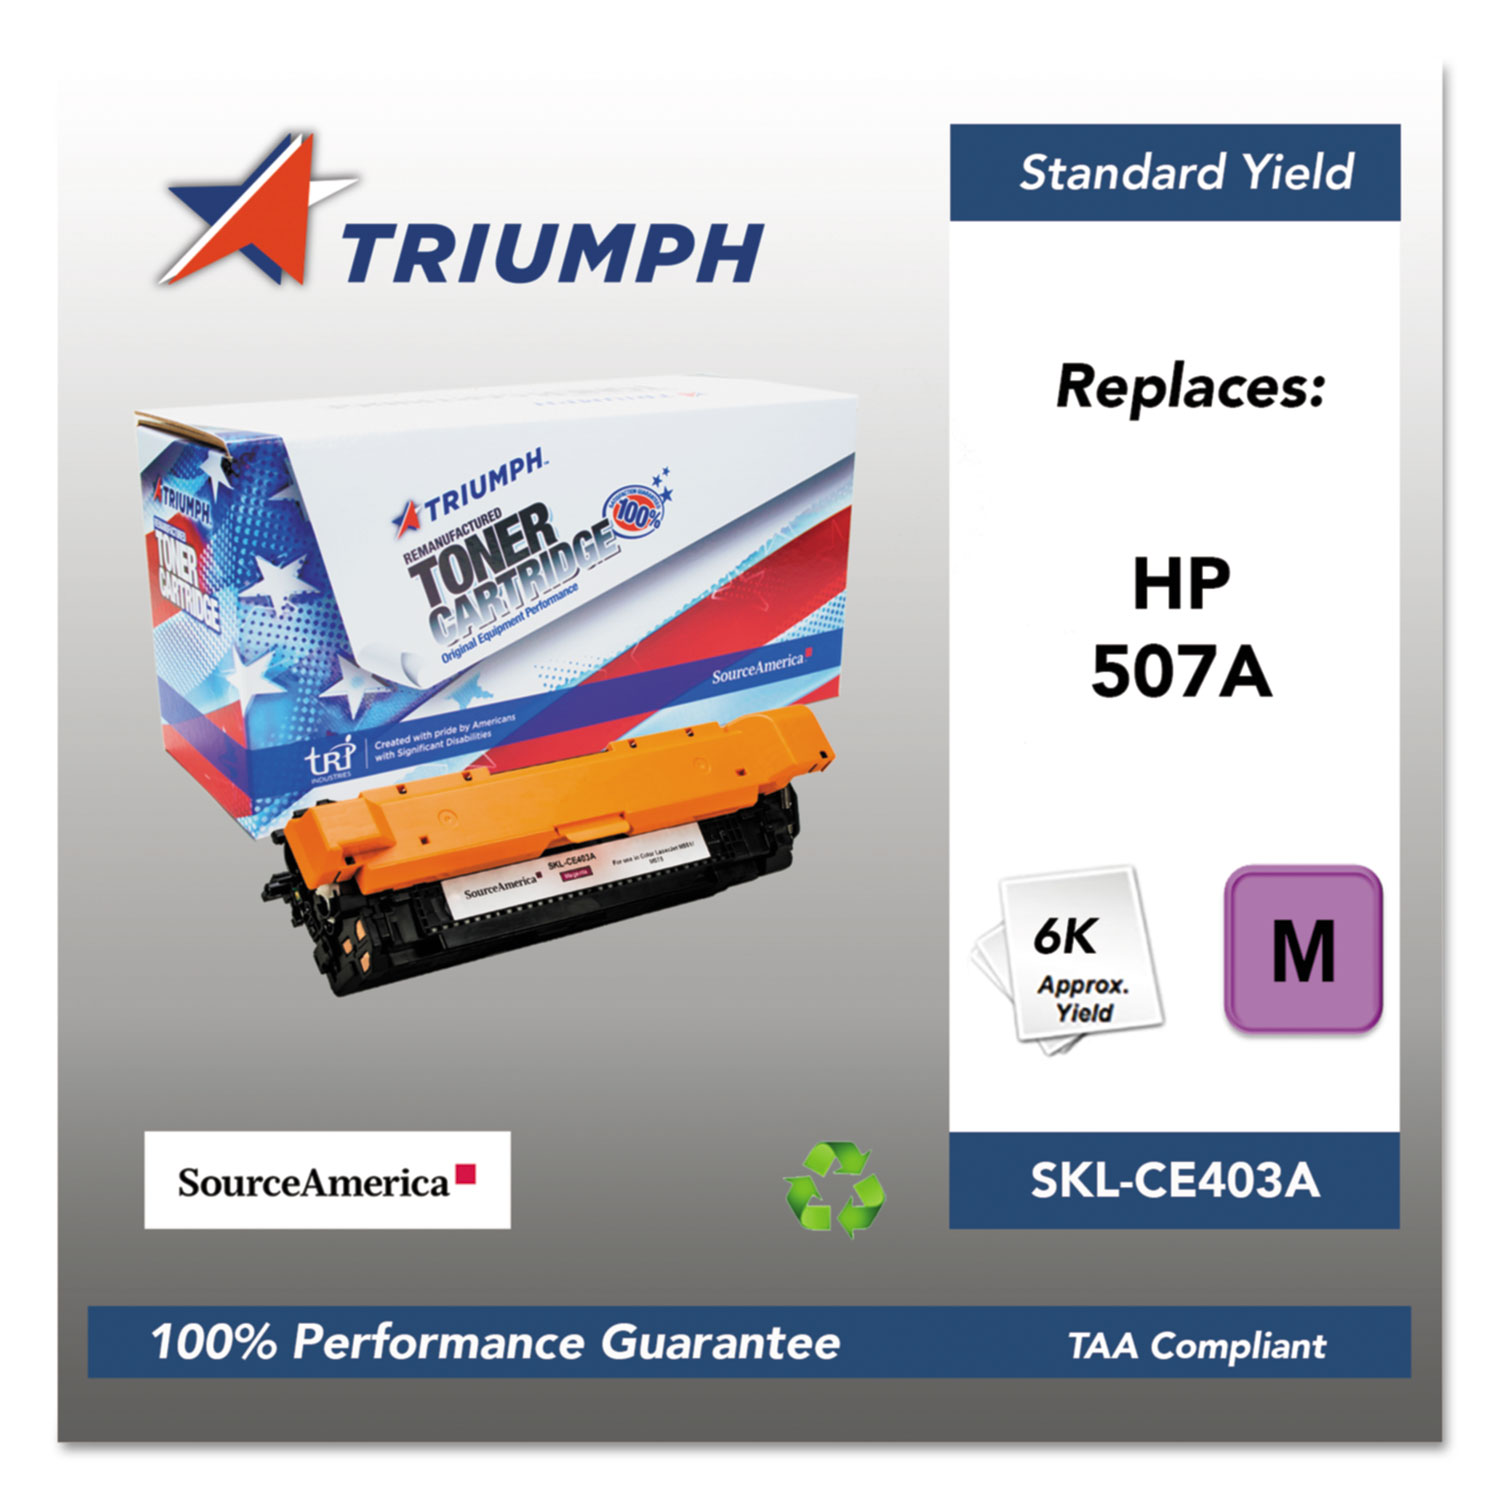  Triumph SKL-CE403A 751000NSH1282 Remanufactured CE403A (507A) Toner, 6000 Page-Yield, Magenta (SKLCE403A) 